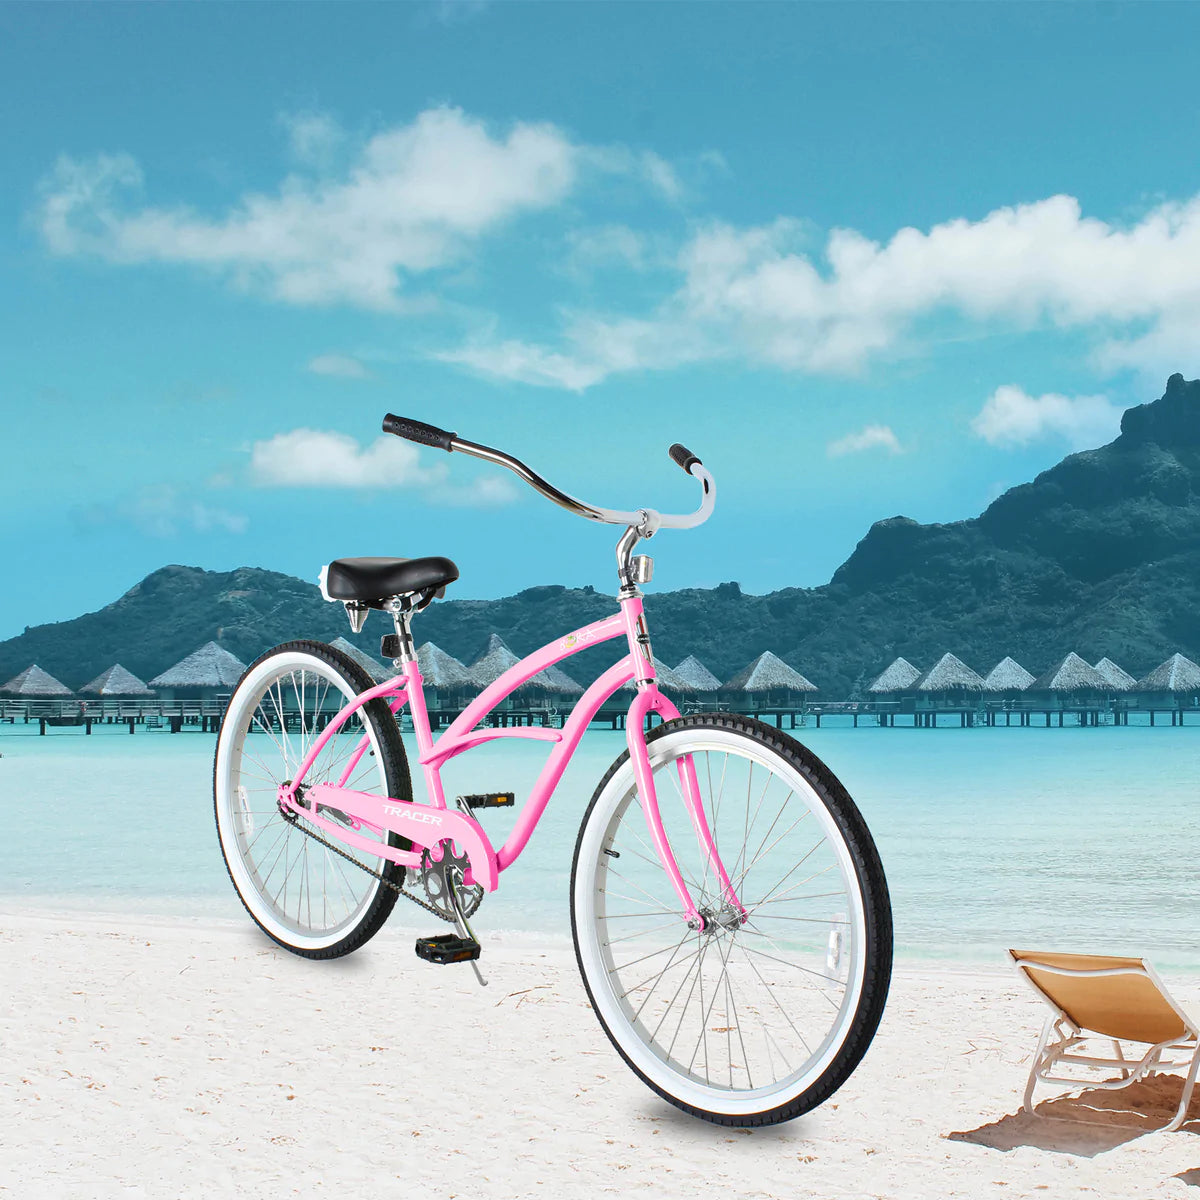 Tracer Bora 26" Beach Cruiser Bike For Women - Pink | Beach Cruiser Bikes | Cruiser Bikes | Beach Bikes | Single Speed | Single Speed Cycle | Adult Bike | Bike Lover USA